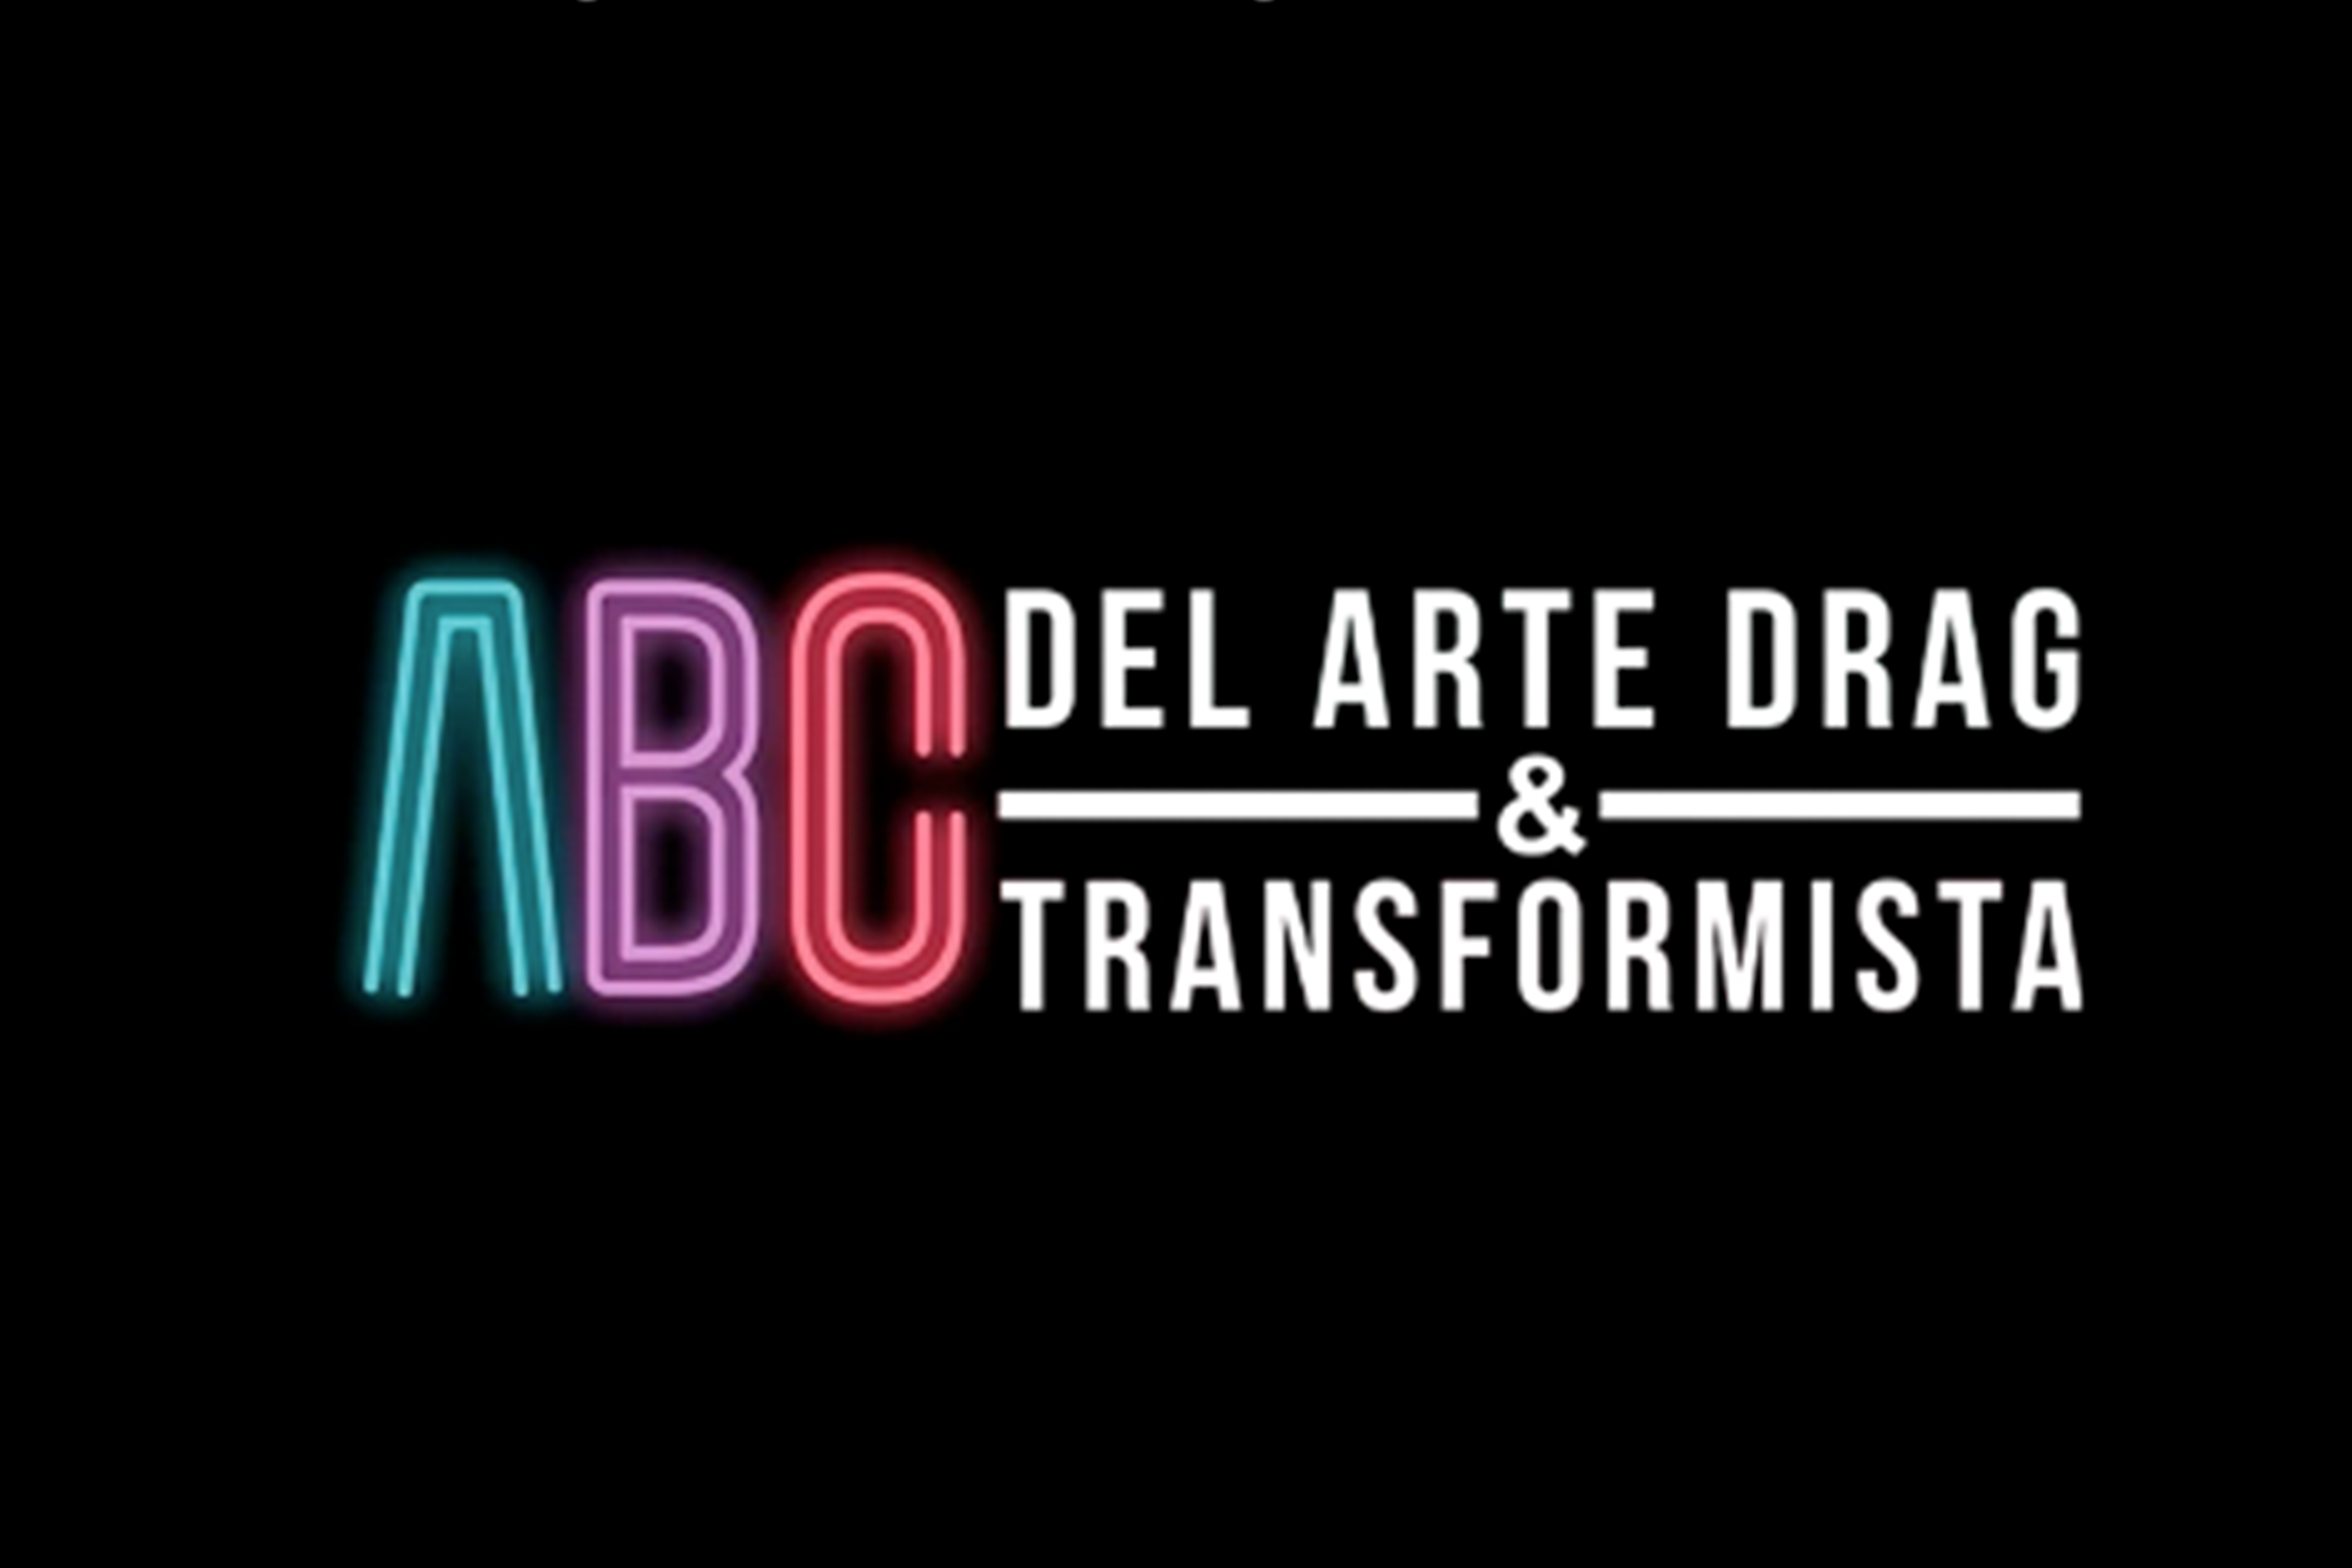 ABC del Arte Drag & Transformista